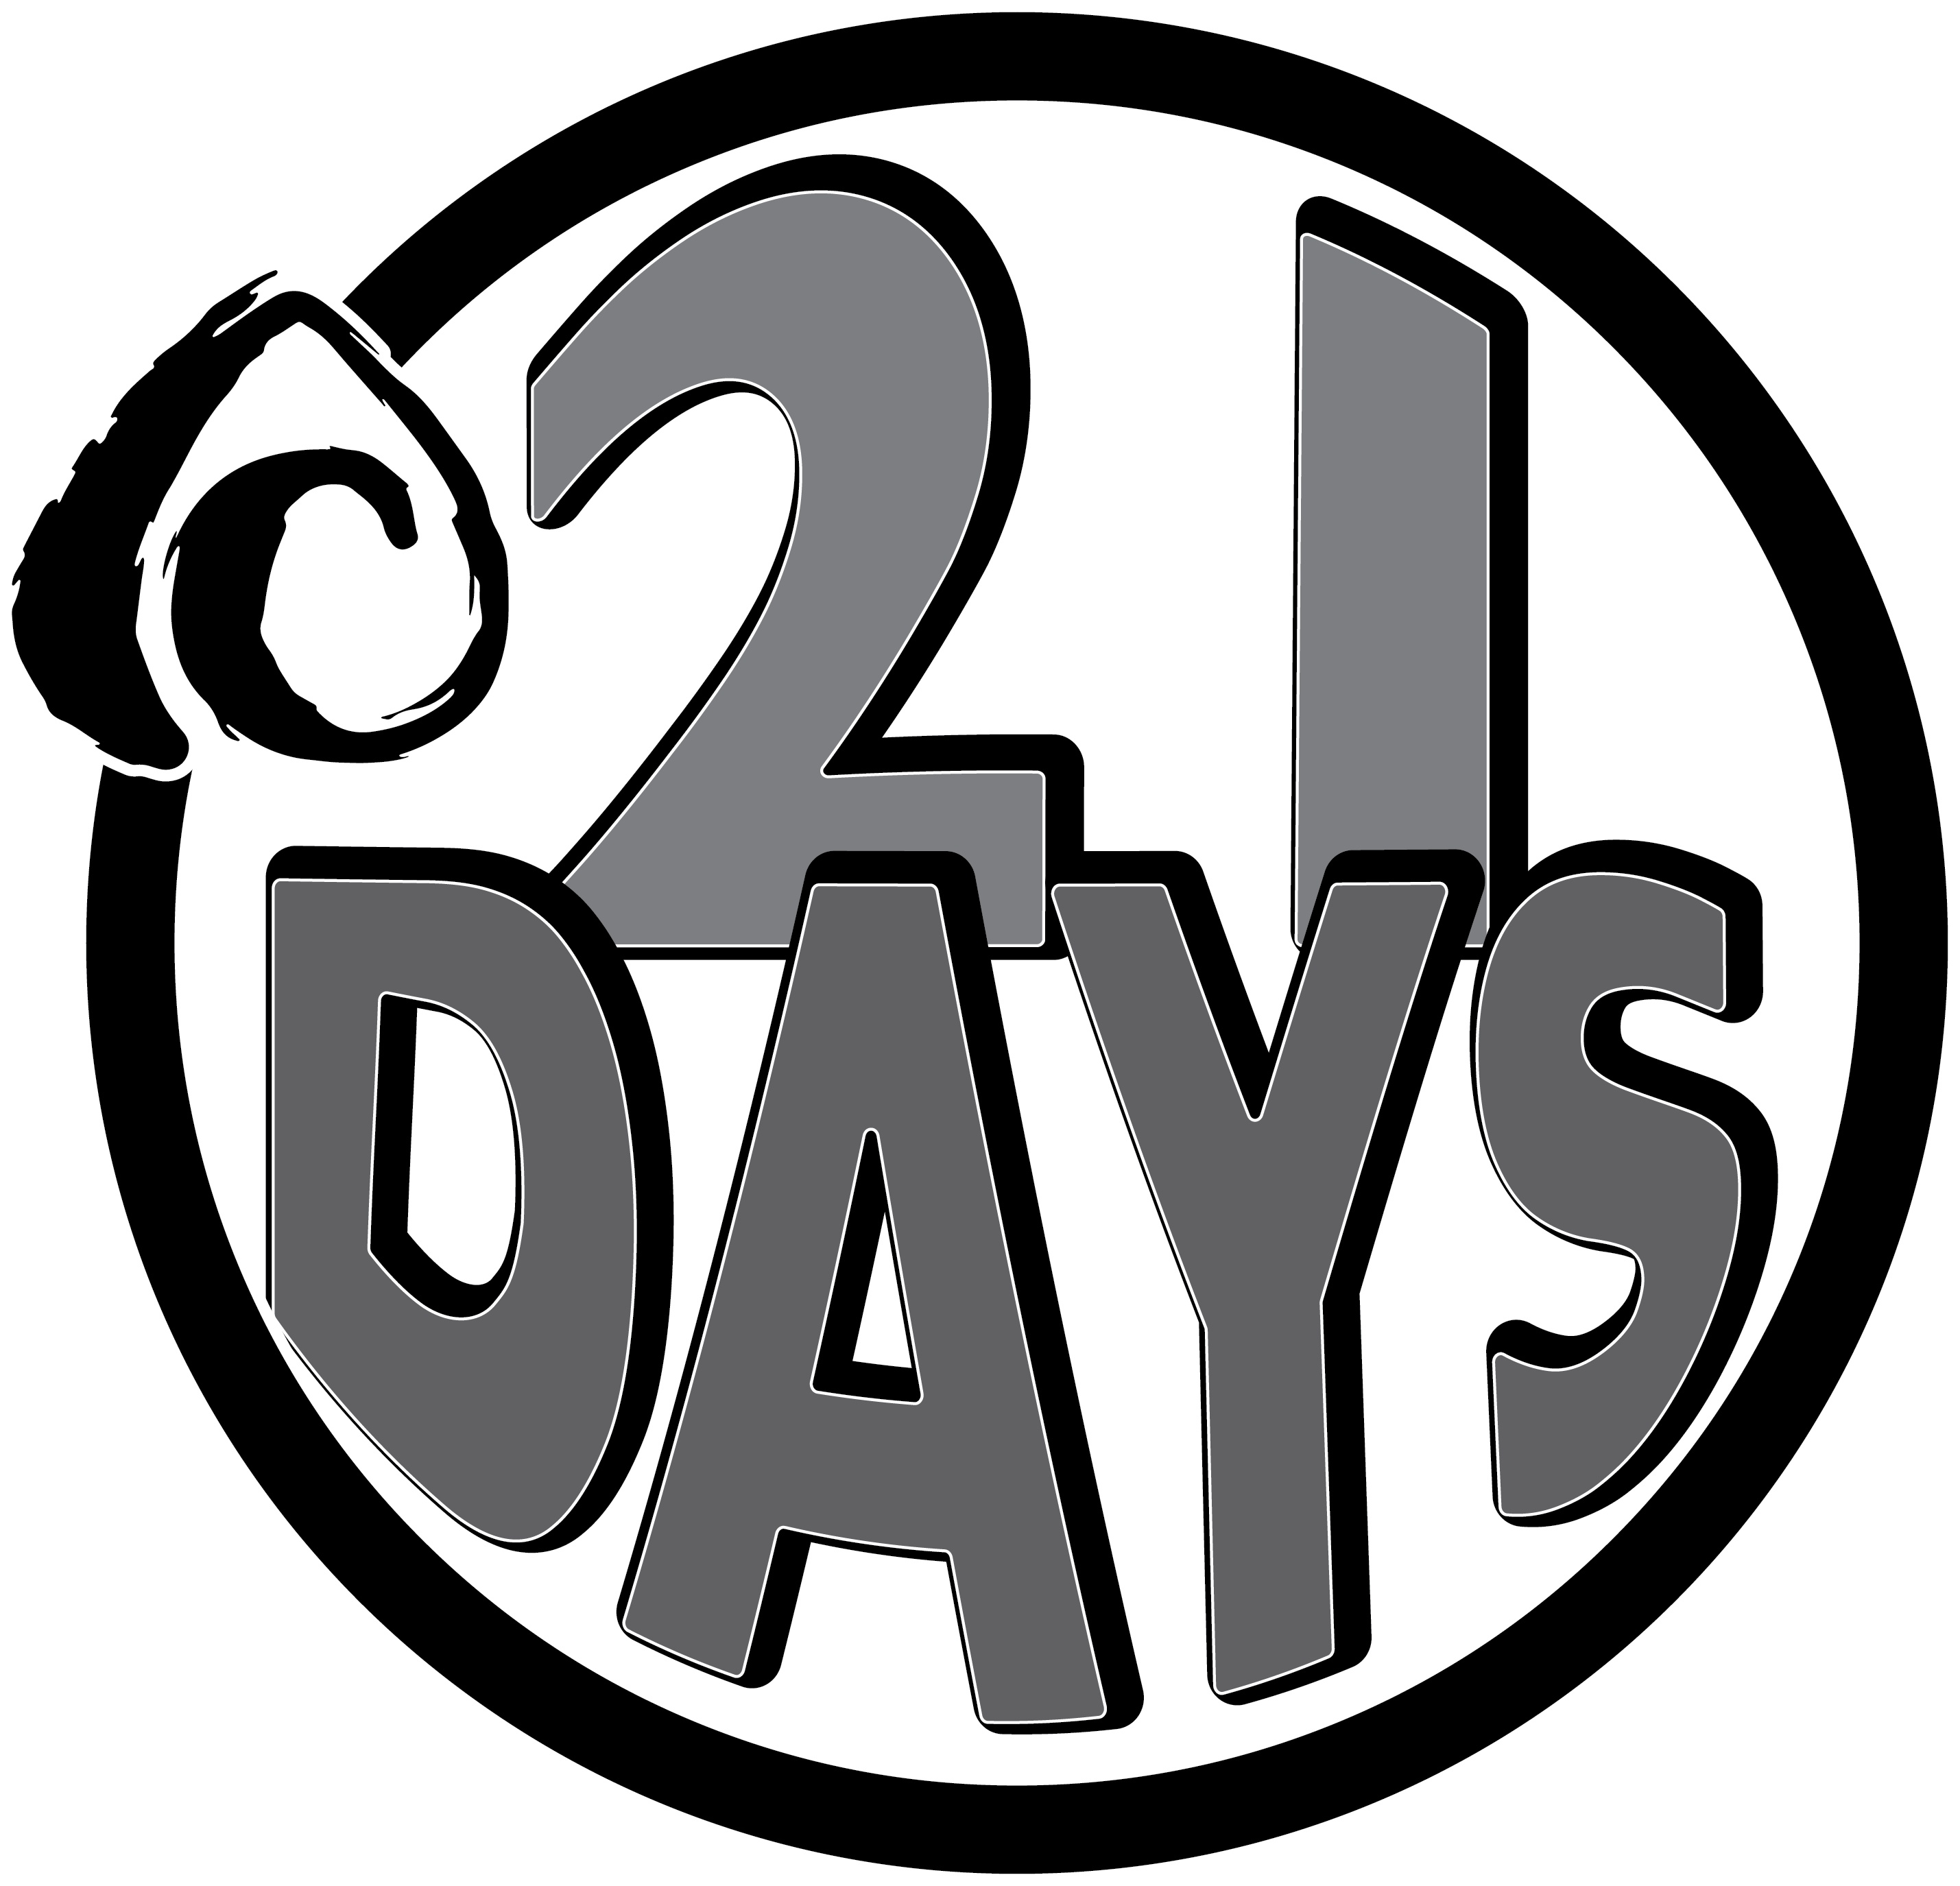 21 Days Creativity black and white logo